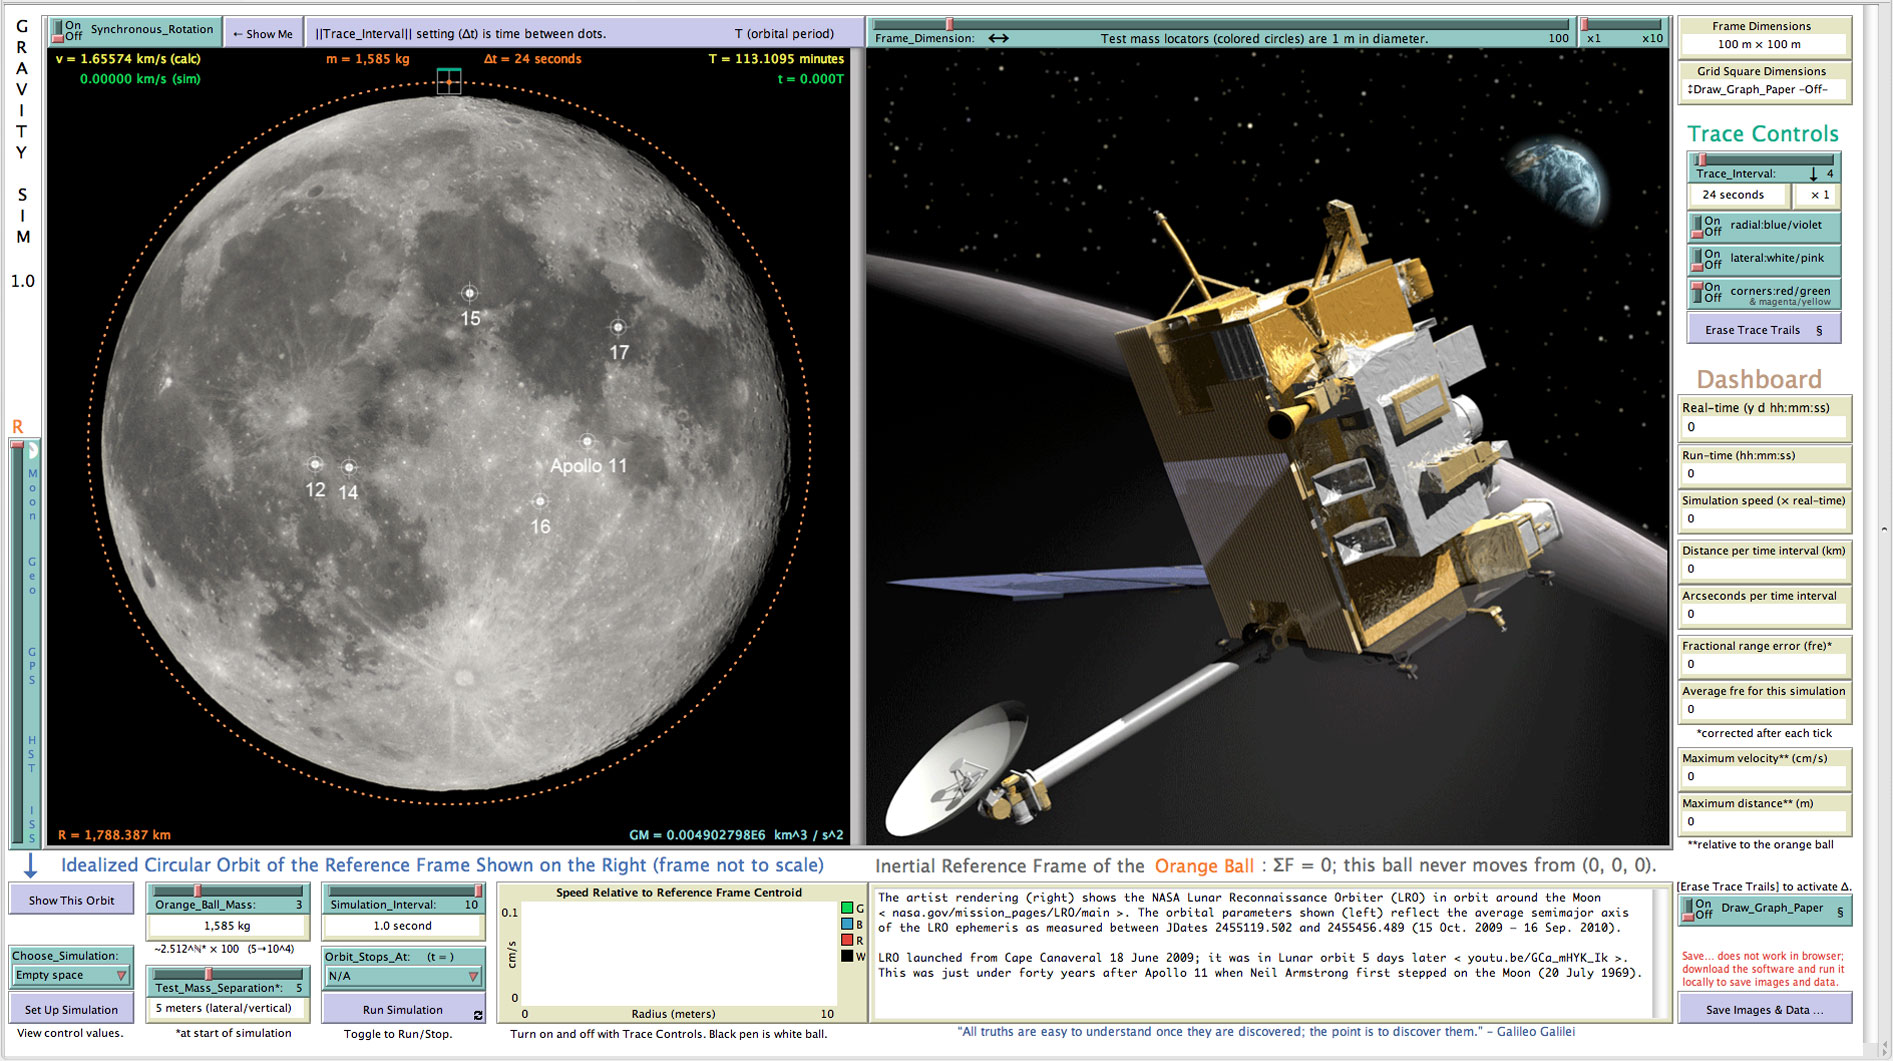 Apollo Landing Sites & Lunar Reconnaissance Orbiter (LRO).